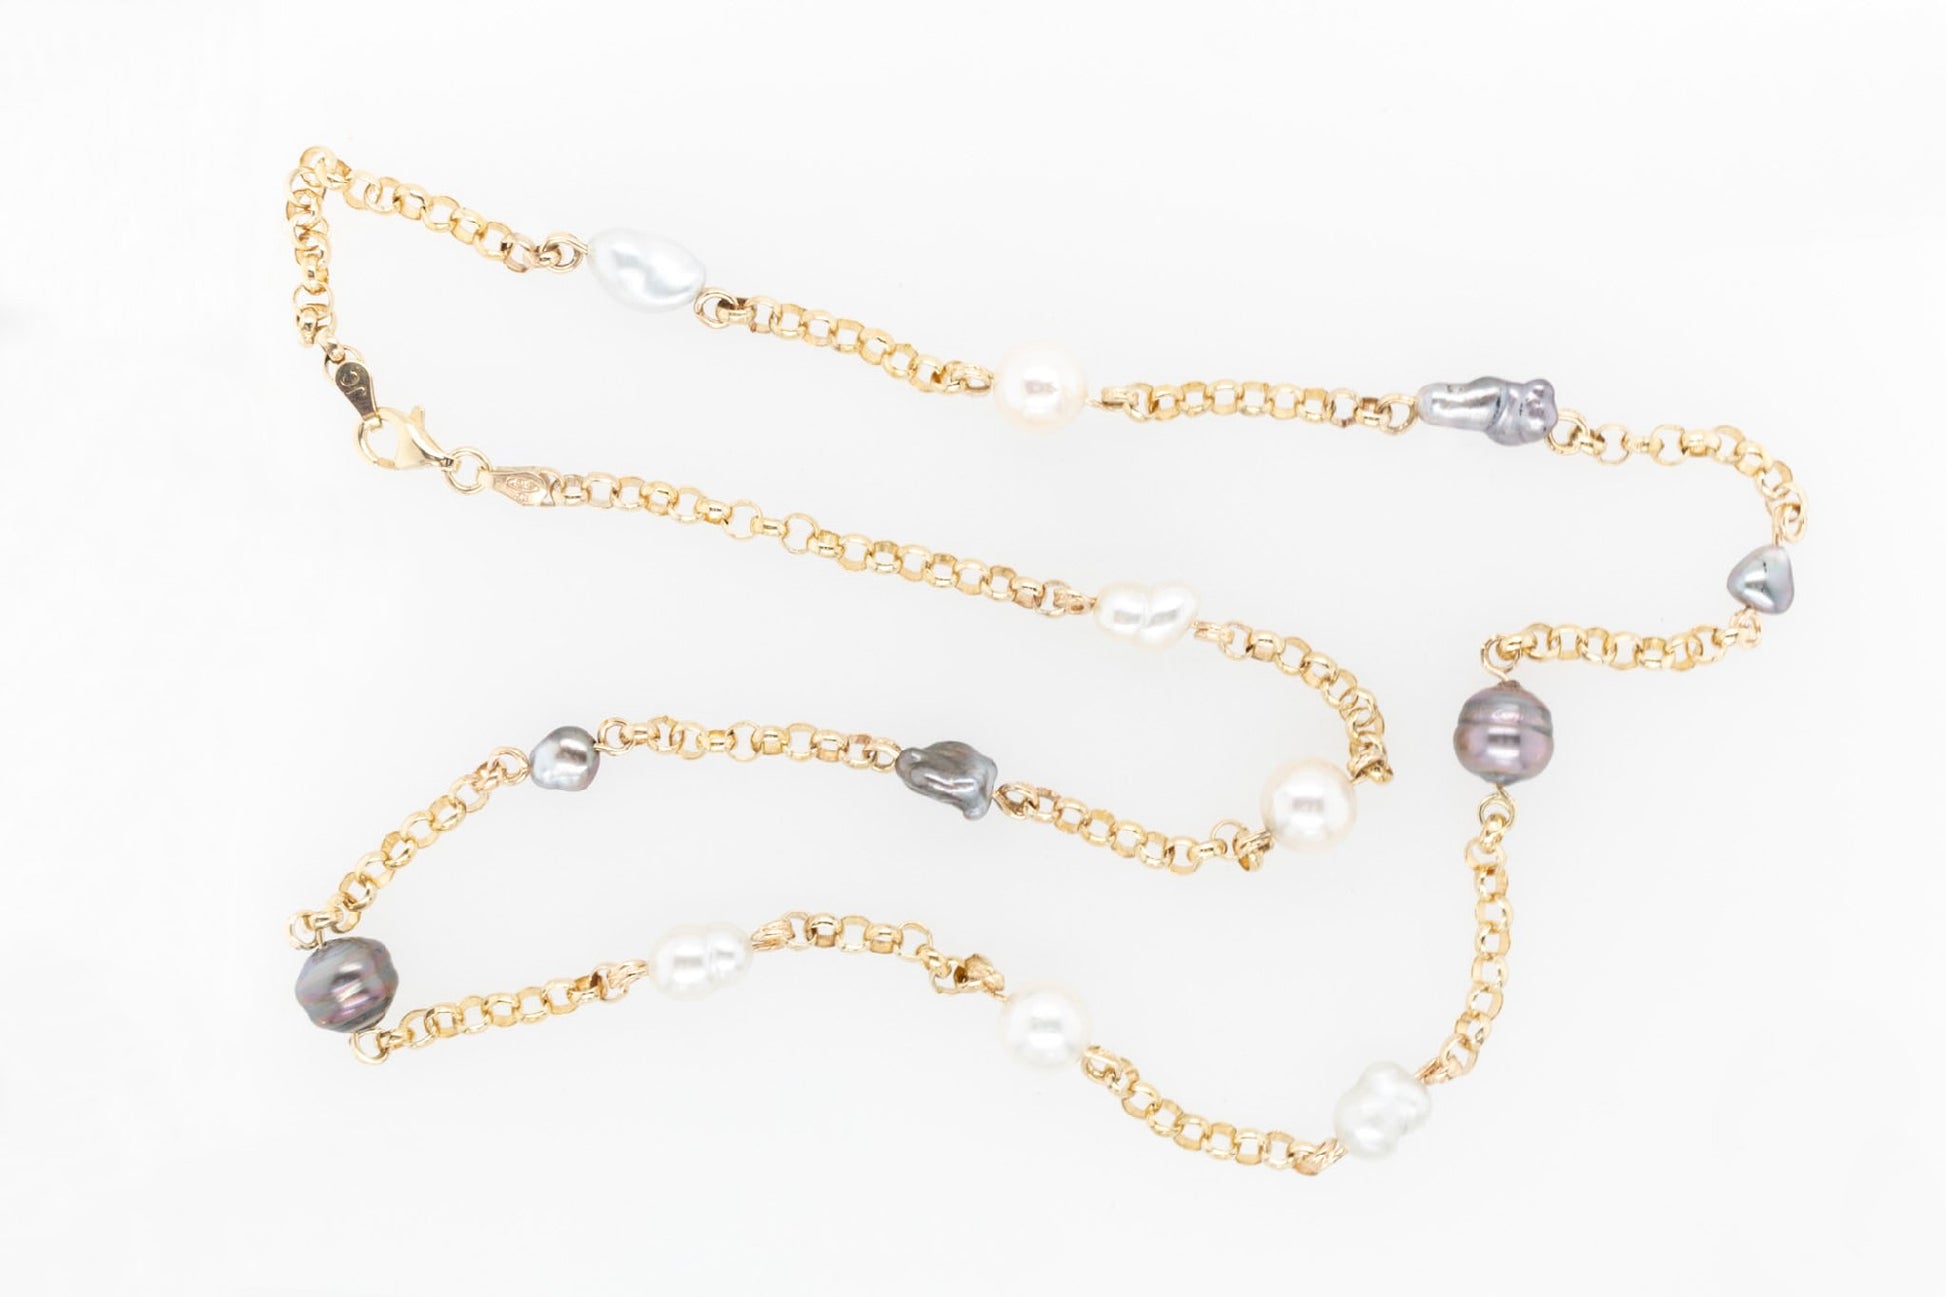 Pearl Assorted Necklace Belcher Link